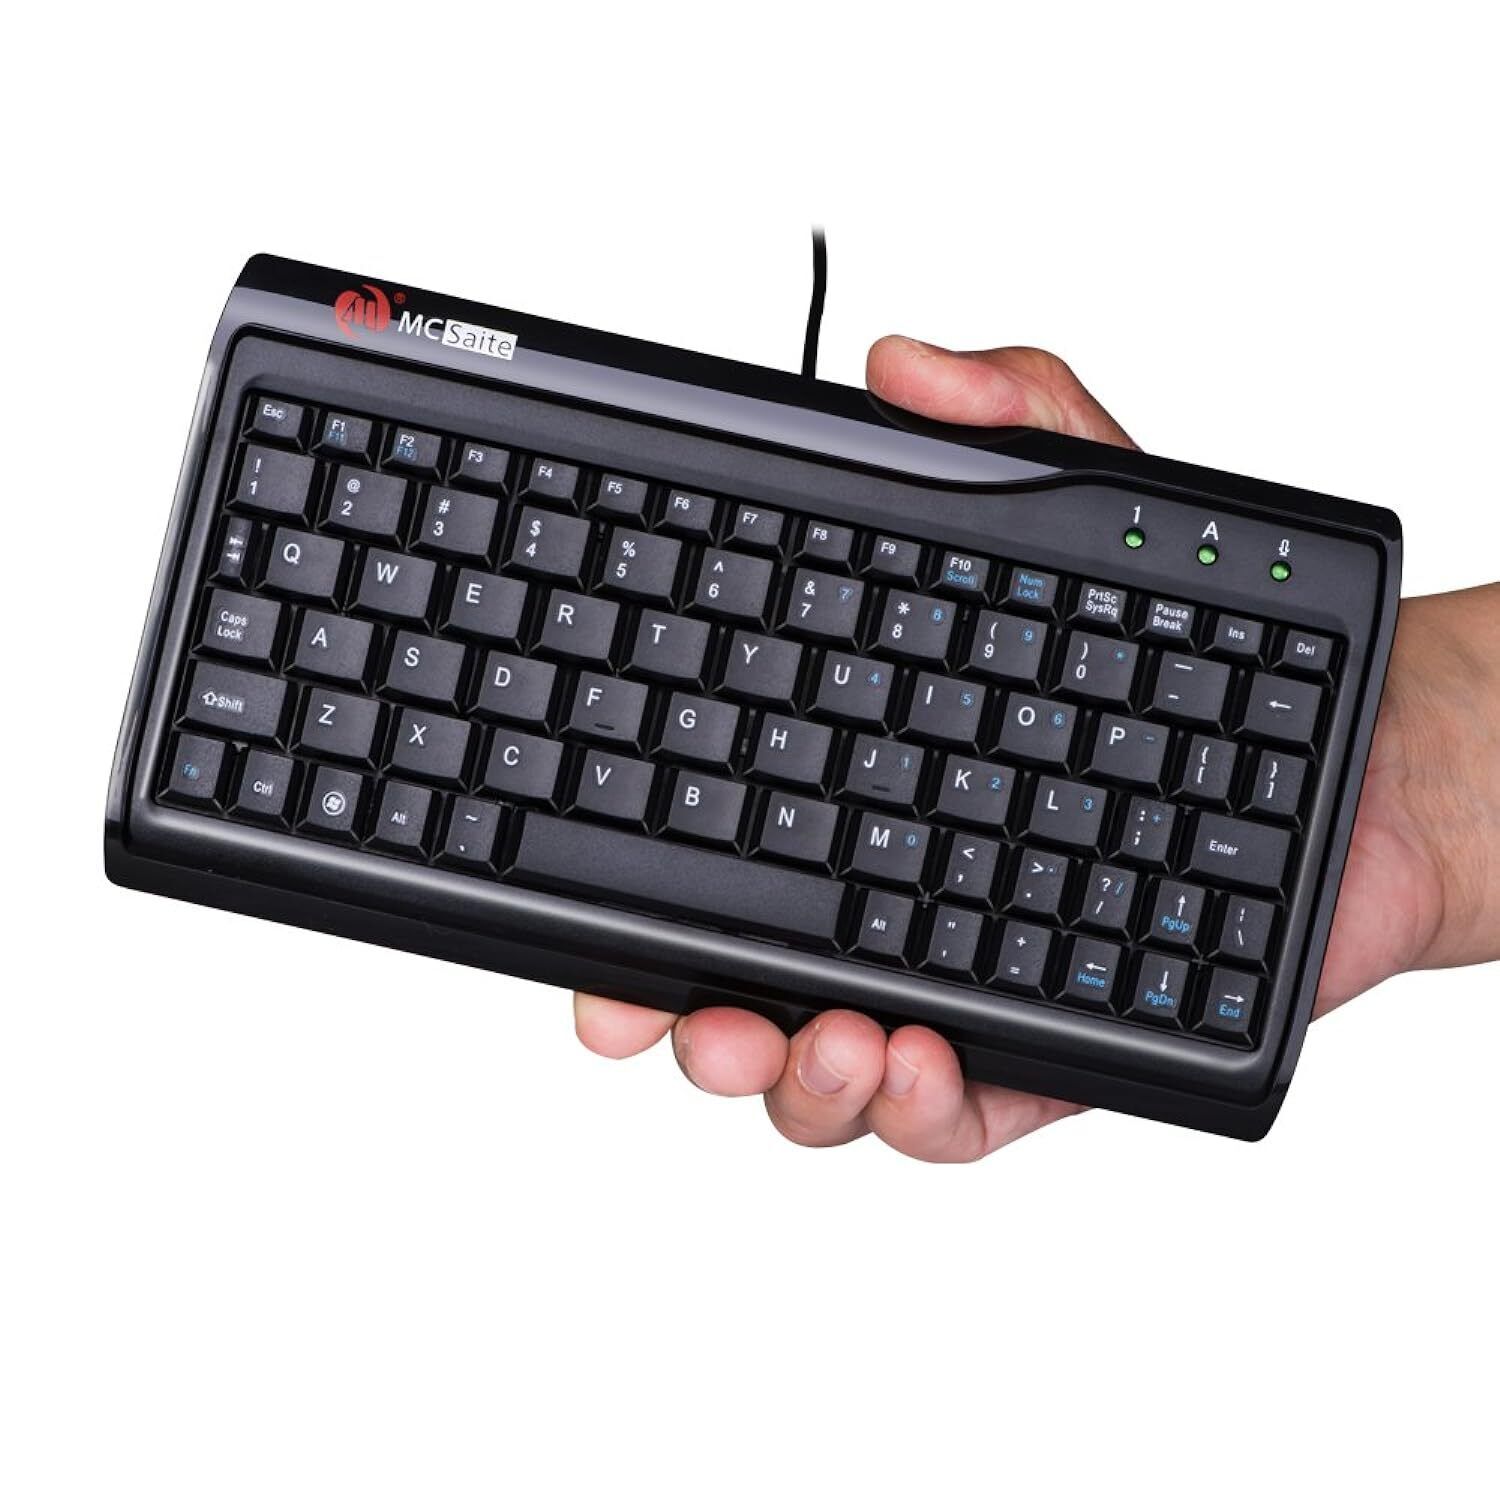 Super Mini Wired Keyboard, Mcsaite Full Size 78 Keys Keypad Small Portable Fit